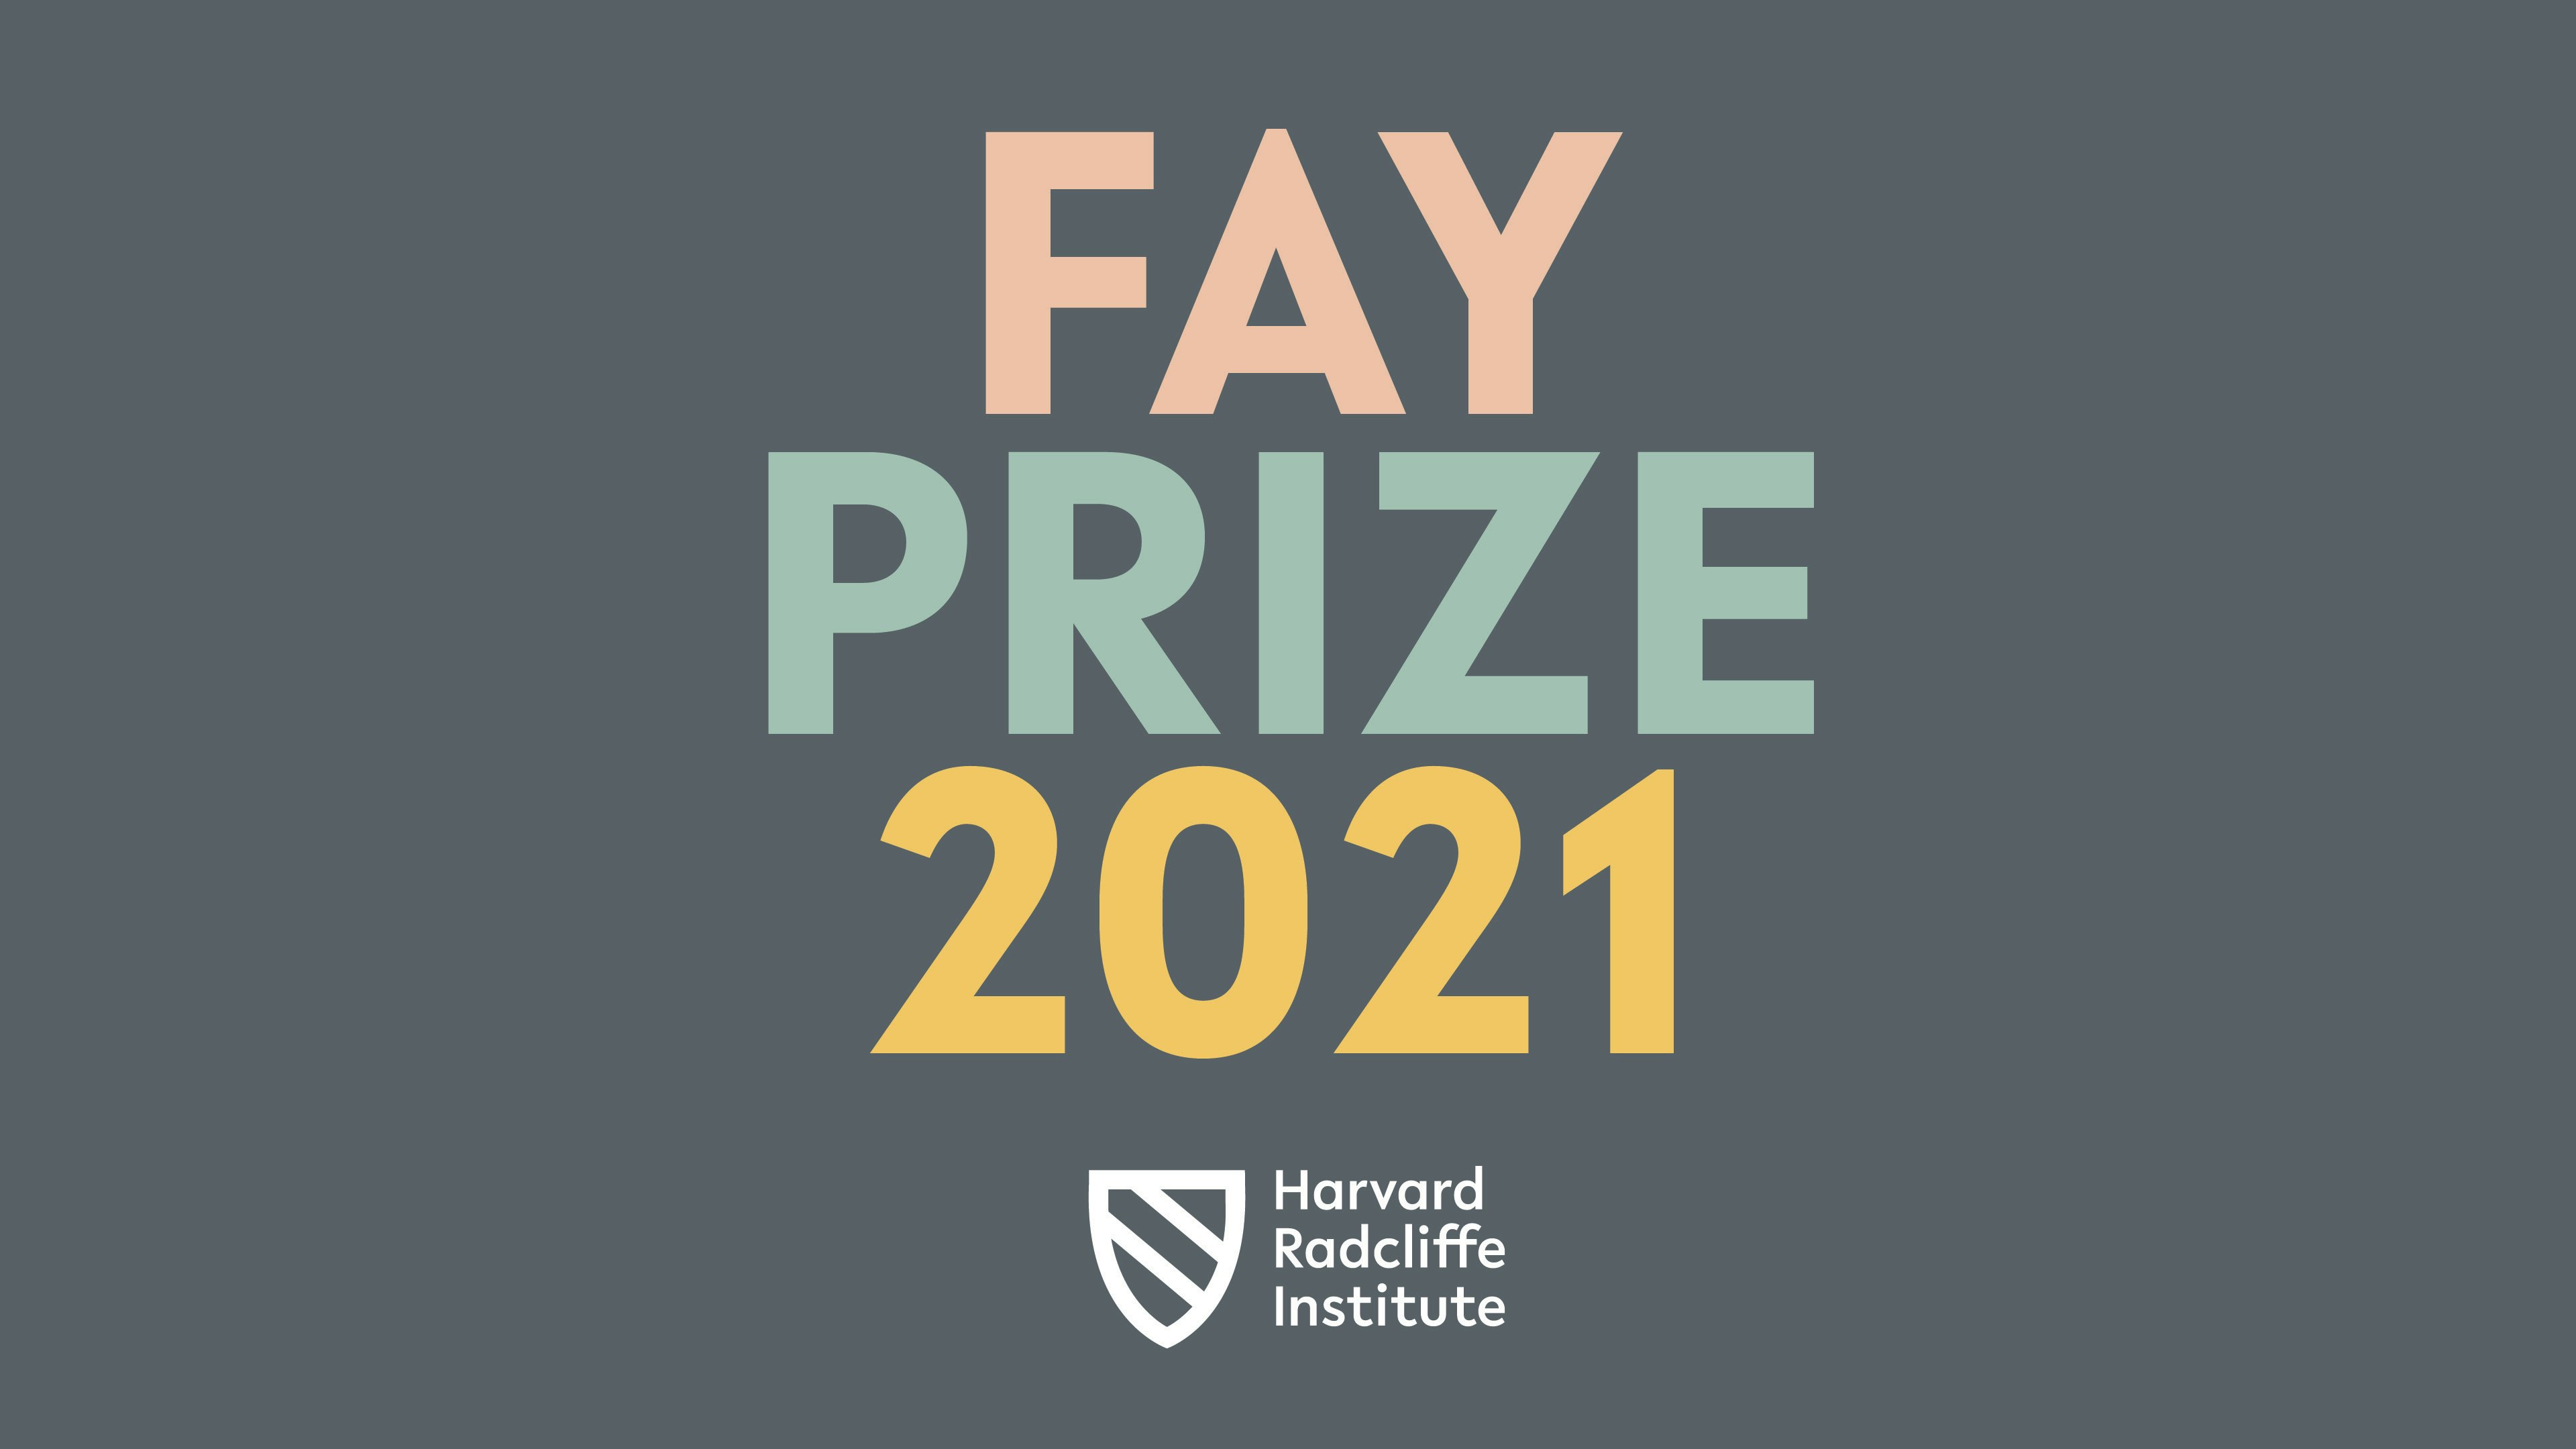 Fay Prize 2021